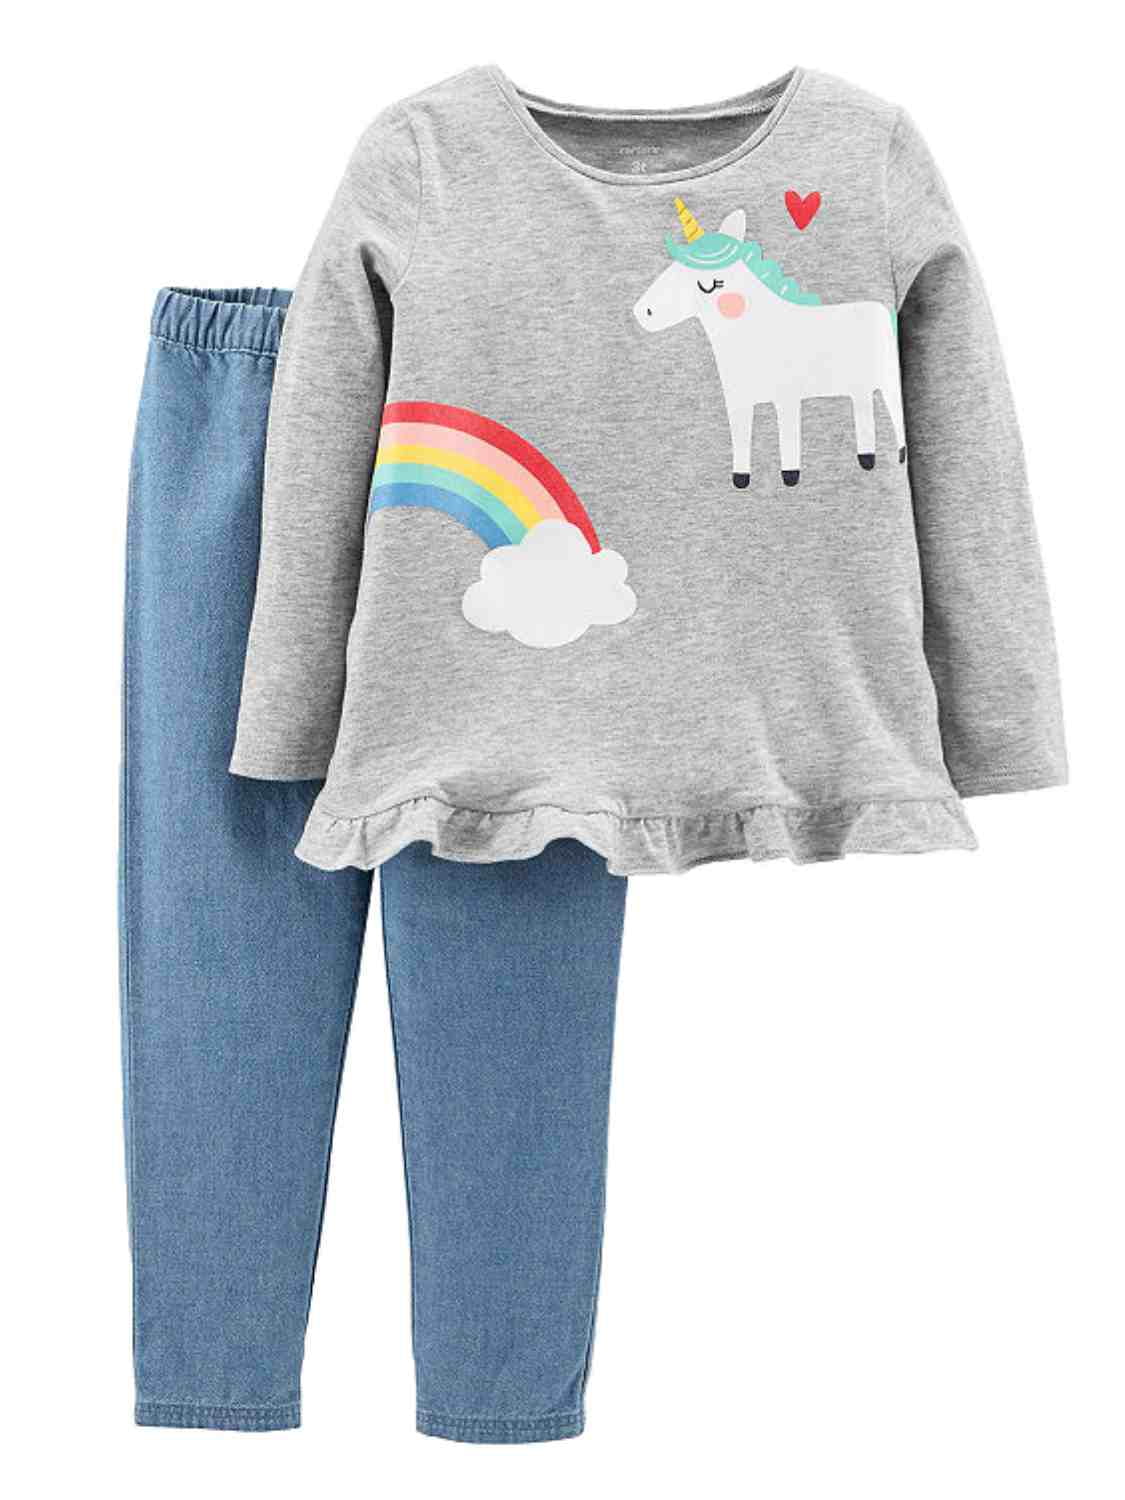 Art Class Toddler 4T Navy Gray Positive Vibes Rainbow Shirt Leggings 2 PC Set 